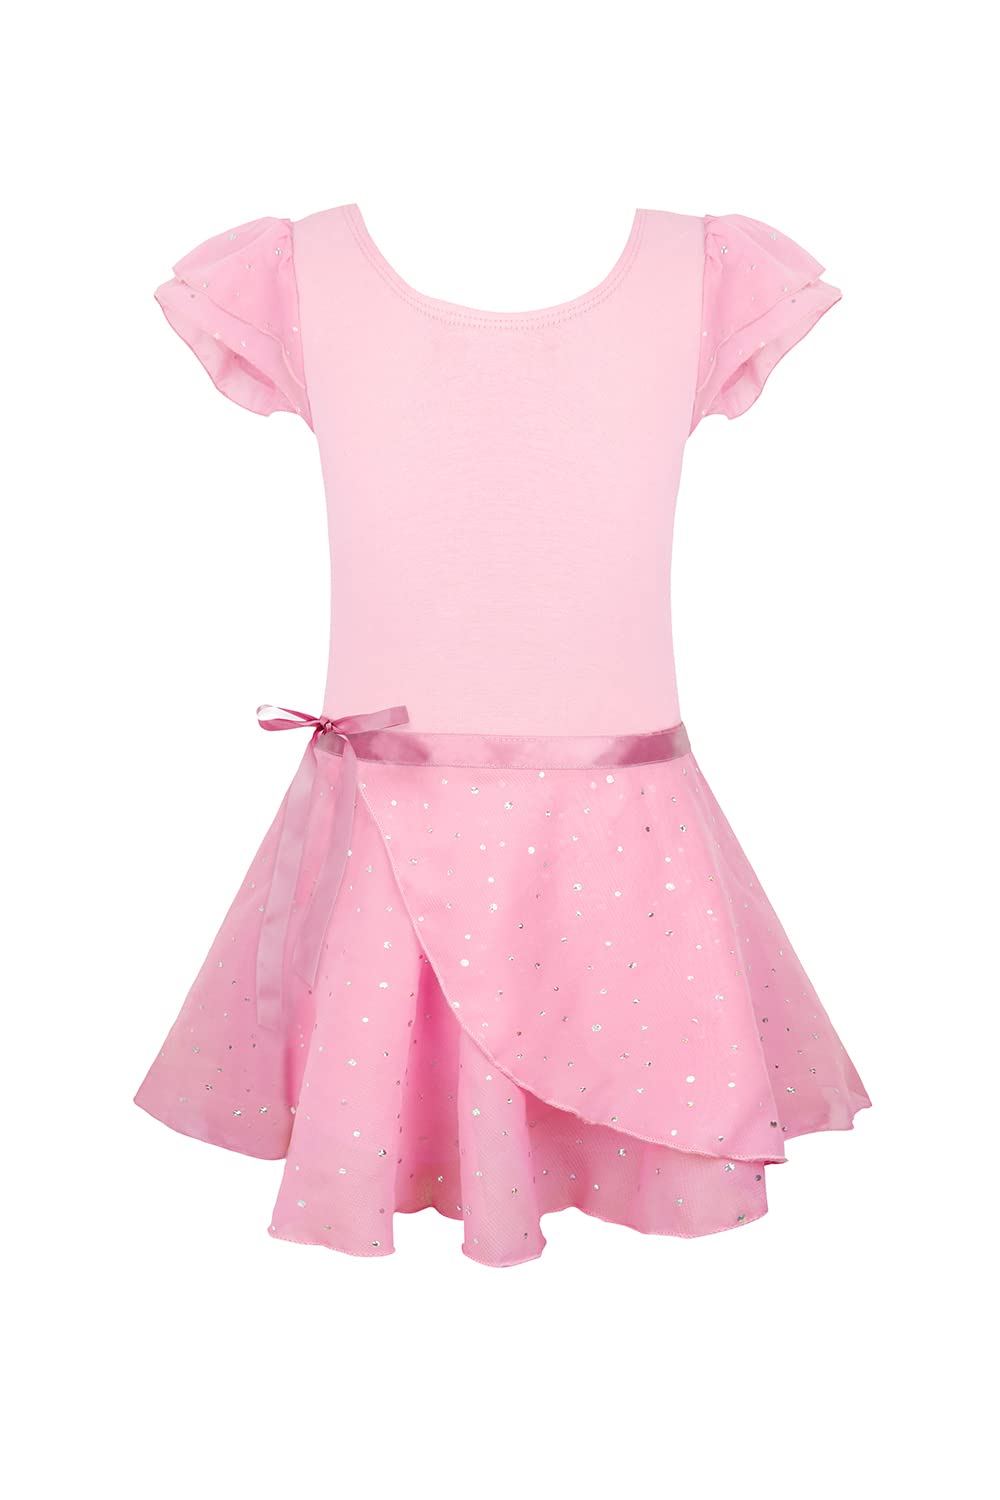 EQSJIU Leotards For girls Ballet Pink Dance Dress Skirted Leotards Size 7-8 Years Old Ruffle Sleeve Sequins Sparkles Toddler gir